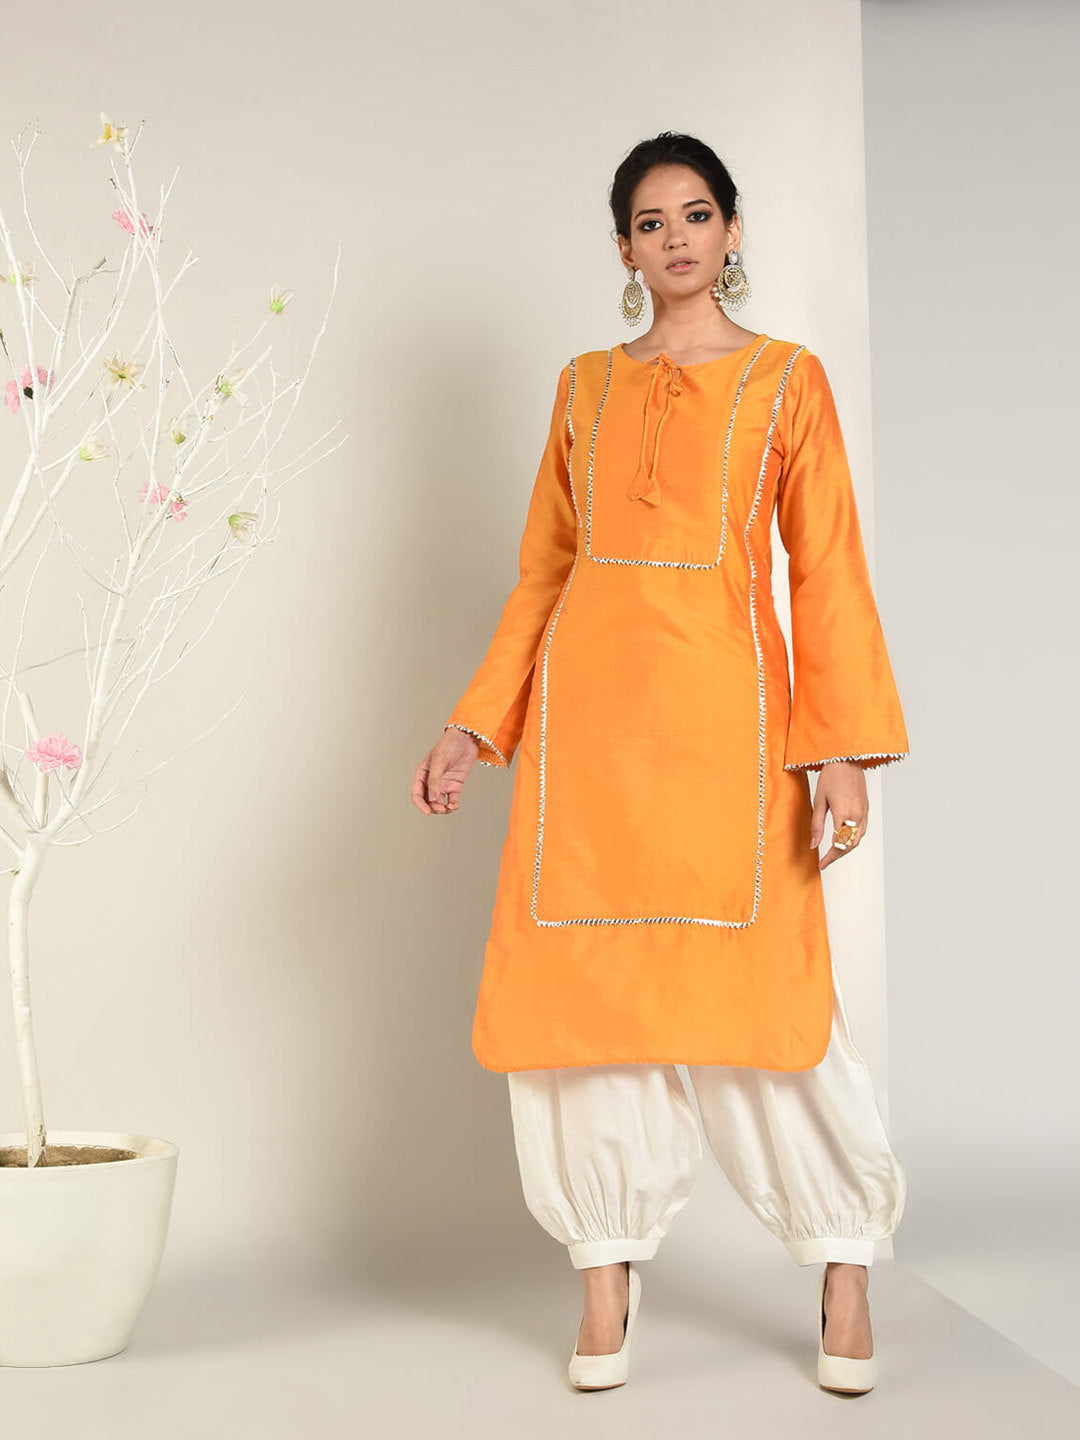 Pathani Salwar Suit - Buy Pathani Salwar Suit online in India